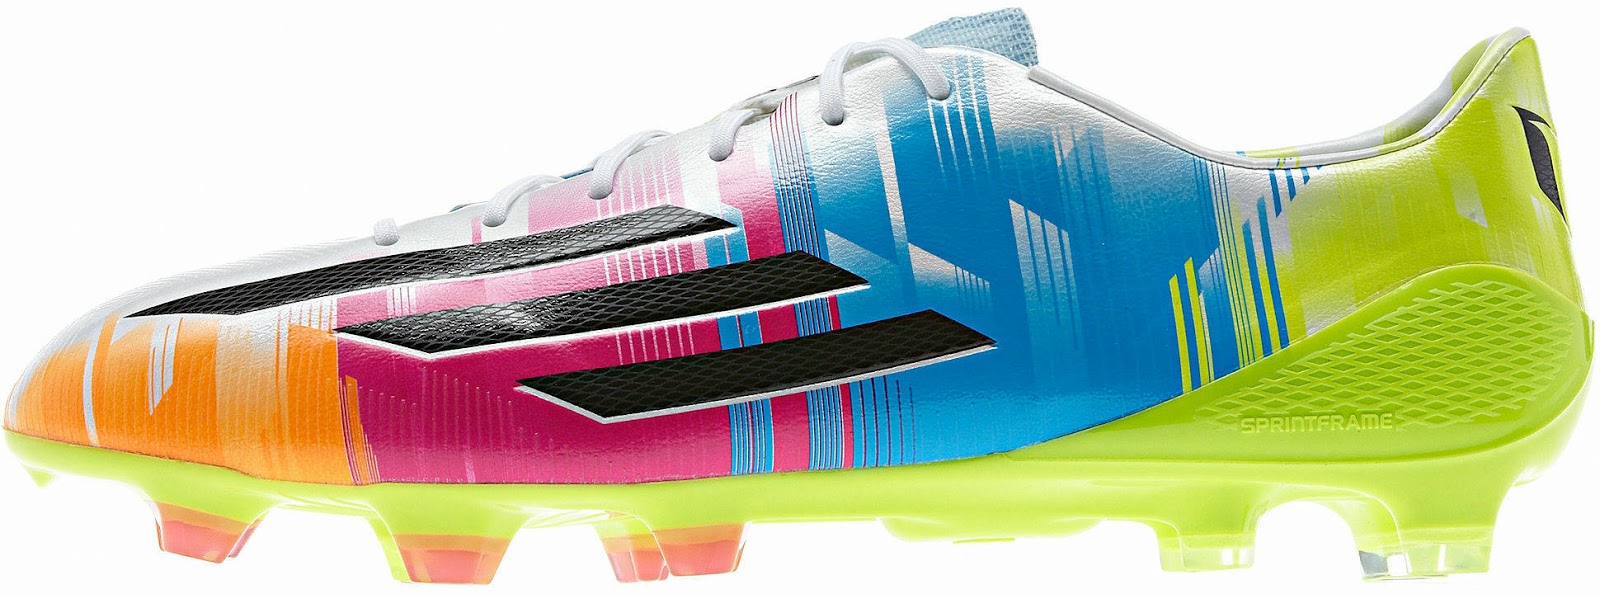 Adidas Adizero IV Colorful Messi 2014 Boot Released - Footy Headlines